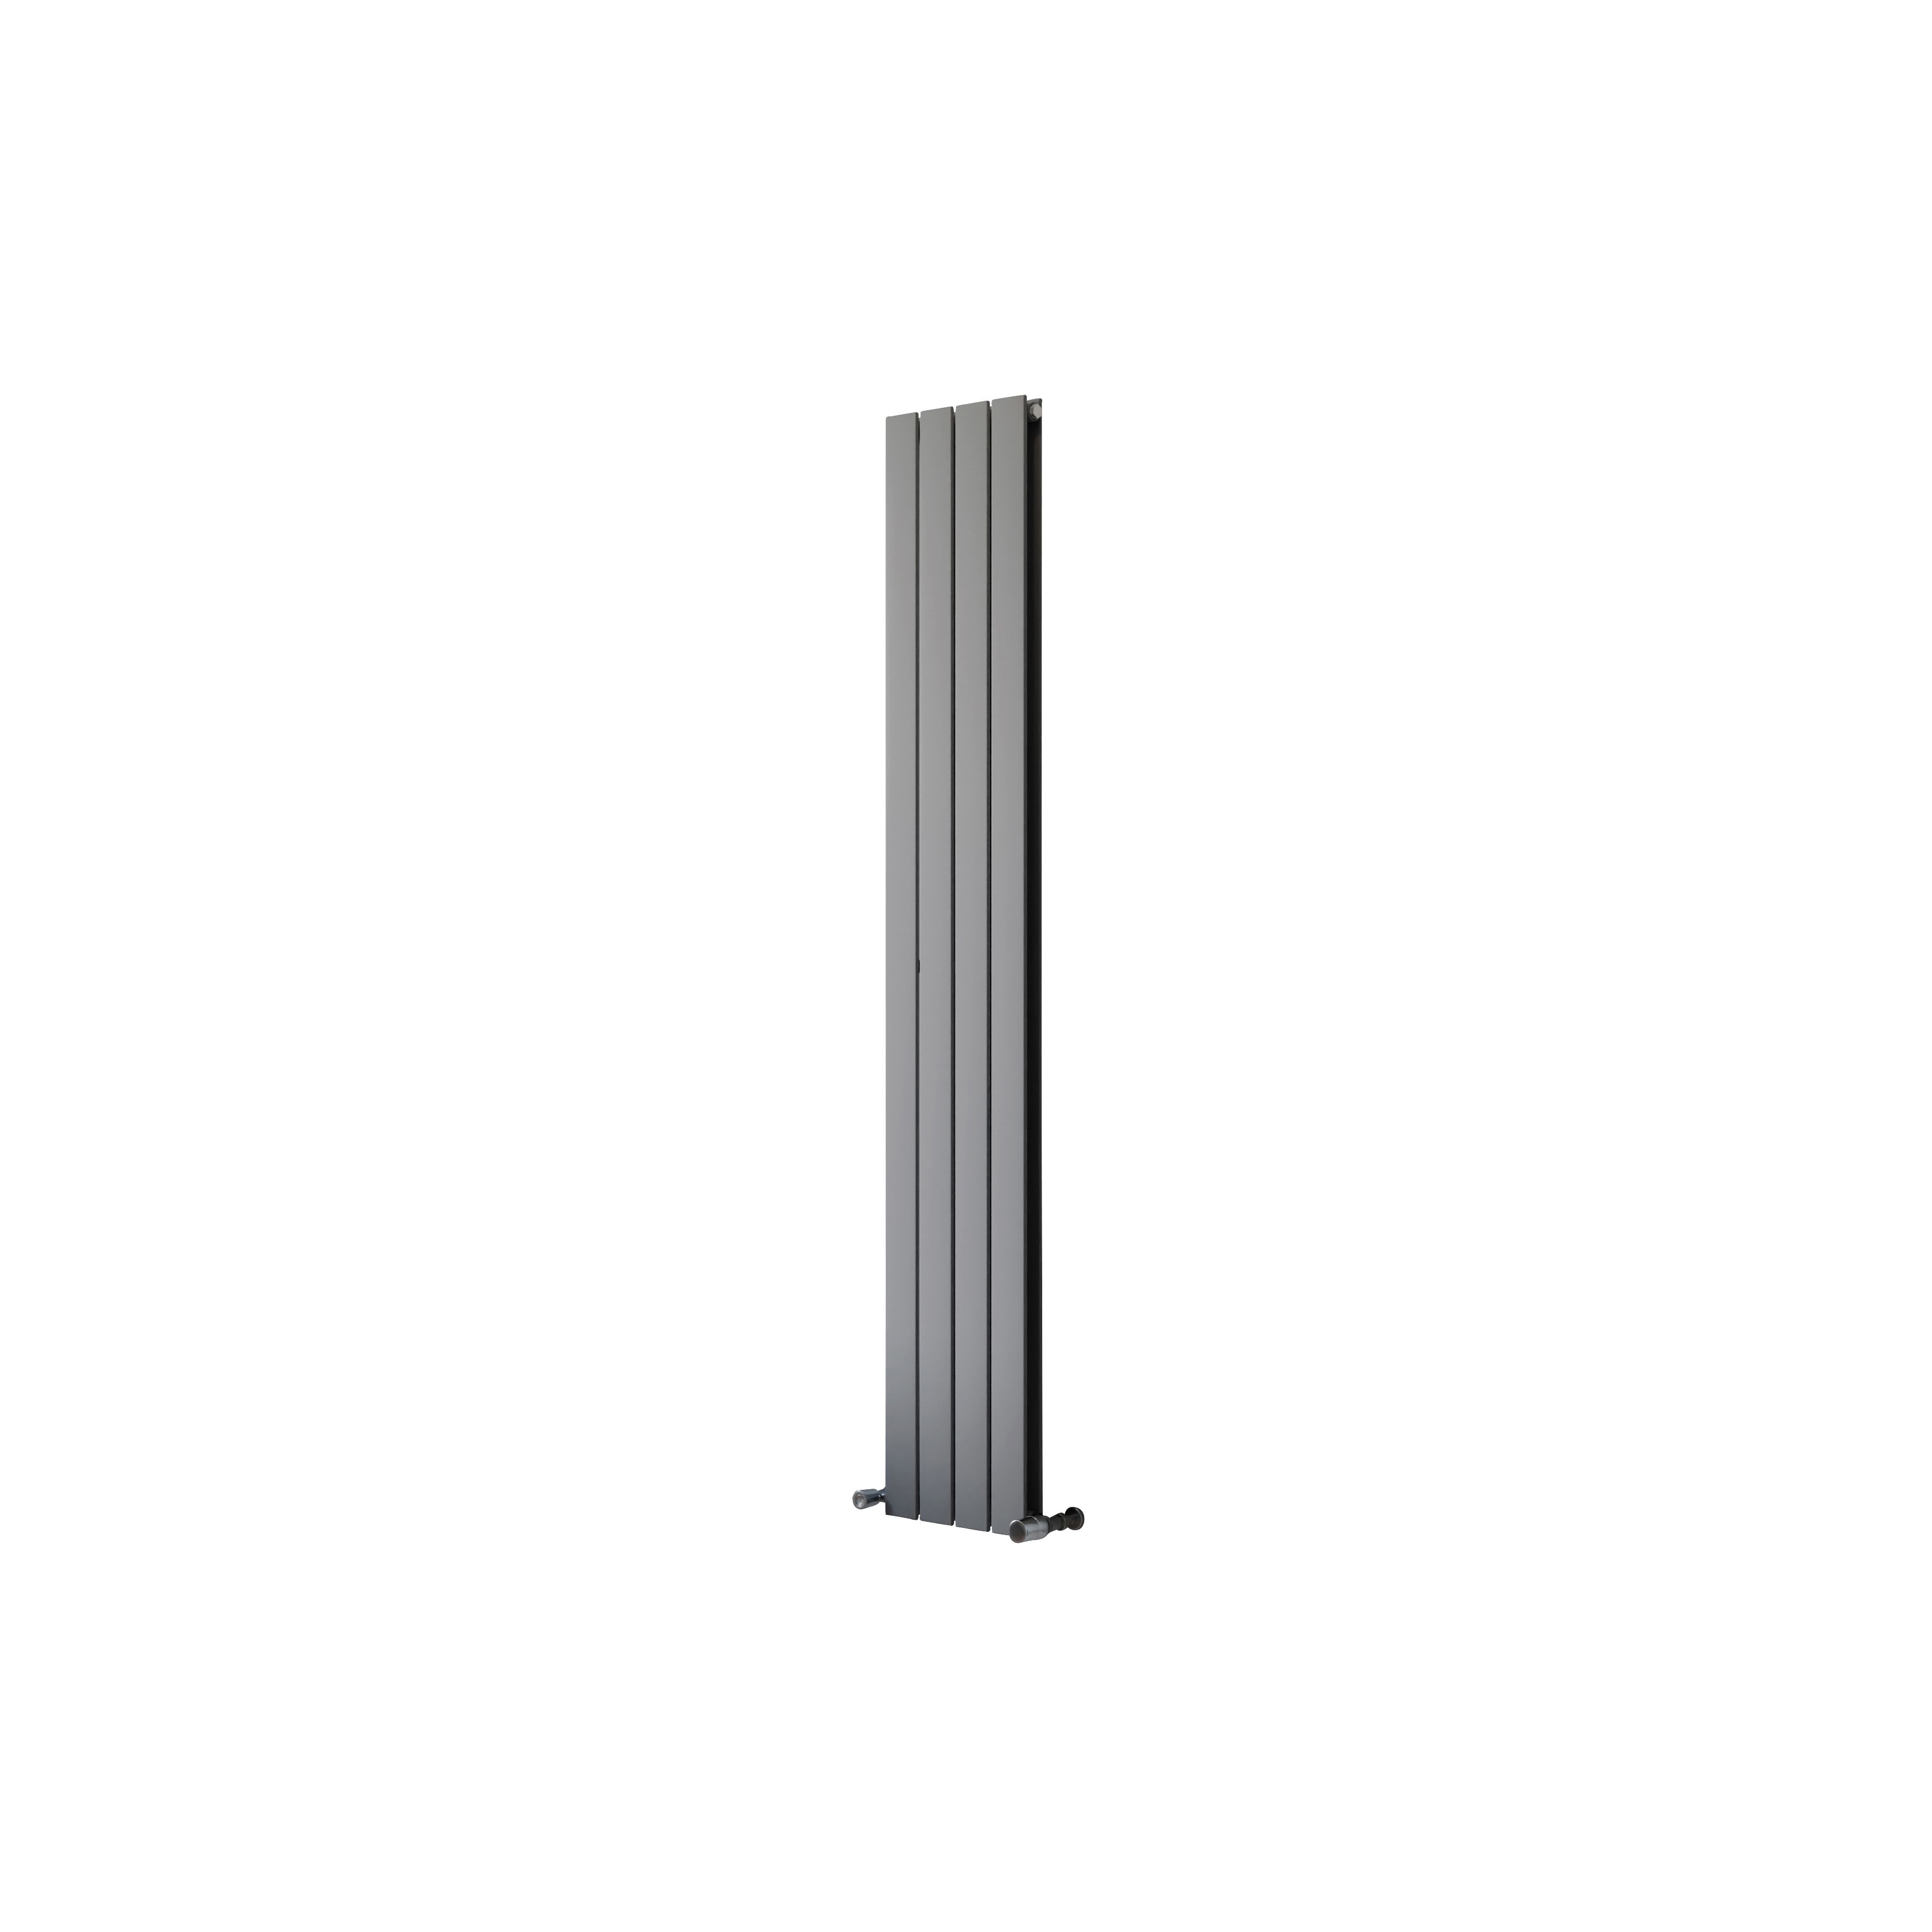 Ximax Vertirad Duplex Universal Silver effect Horizontal or vertical Designer Radiator, (W)295mm x (H)1800mm